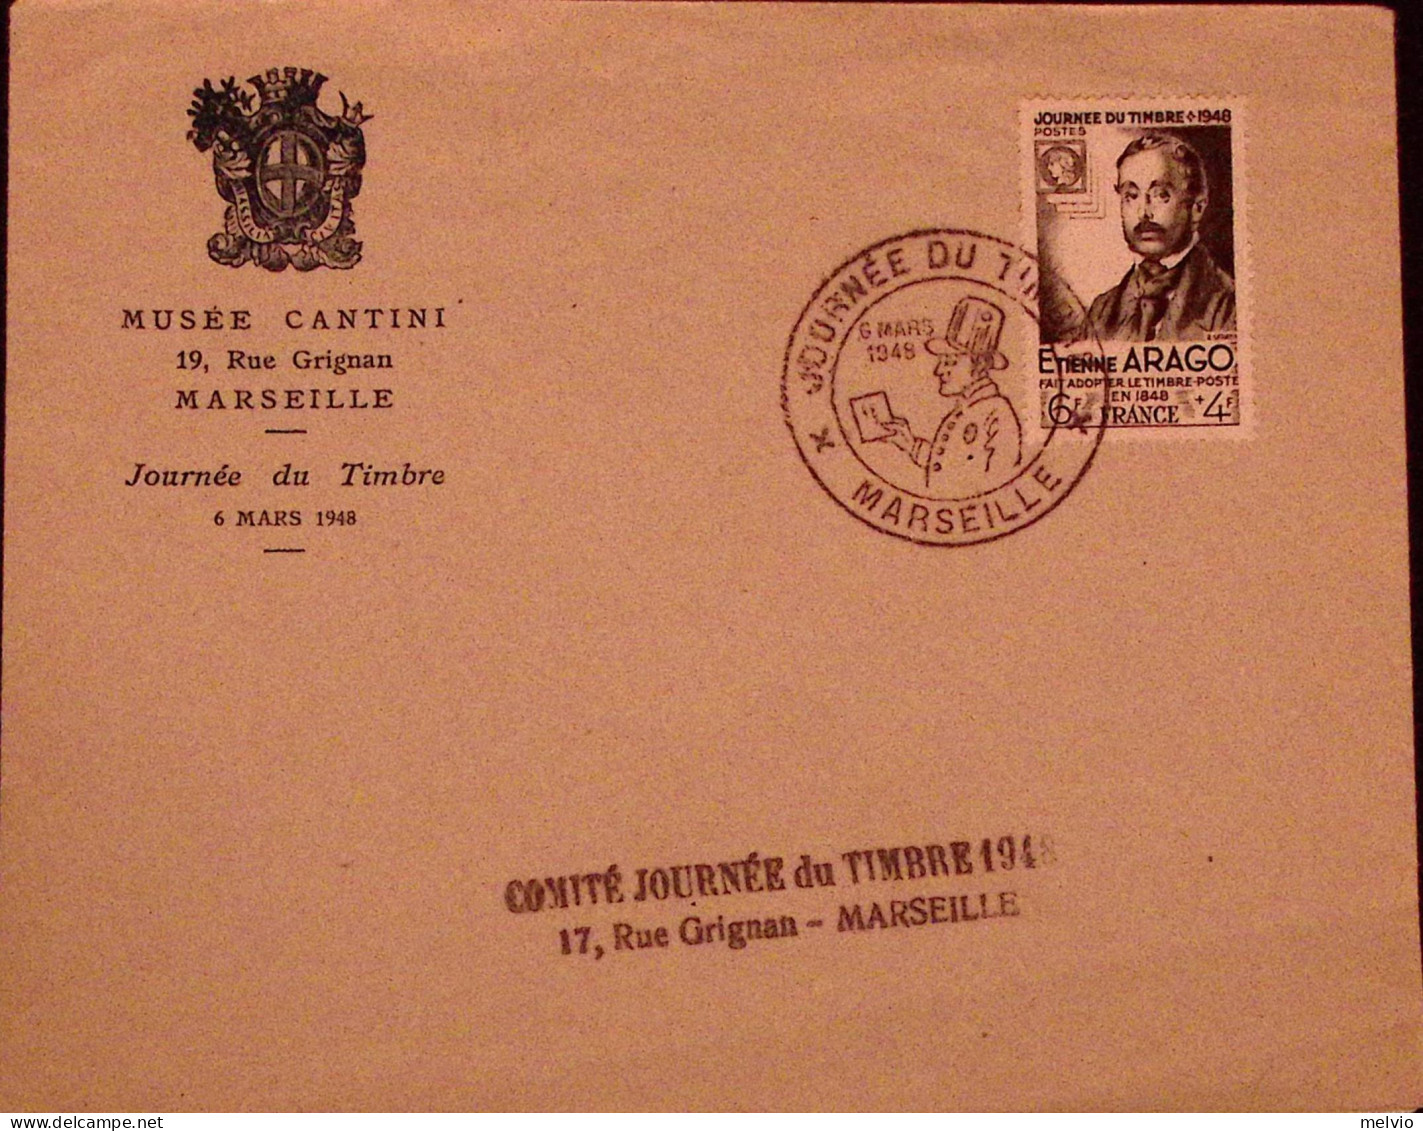 1948-Francia FRANCE Etienne Arago, Giorn. Francobollo (794) Fdc - ....-1949